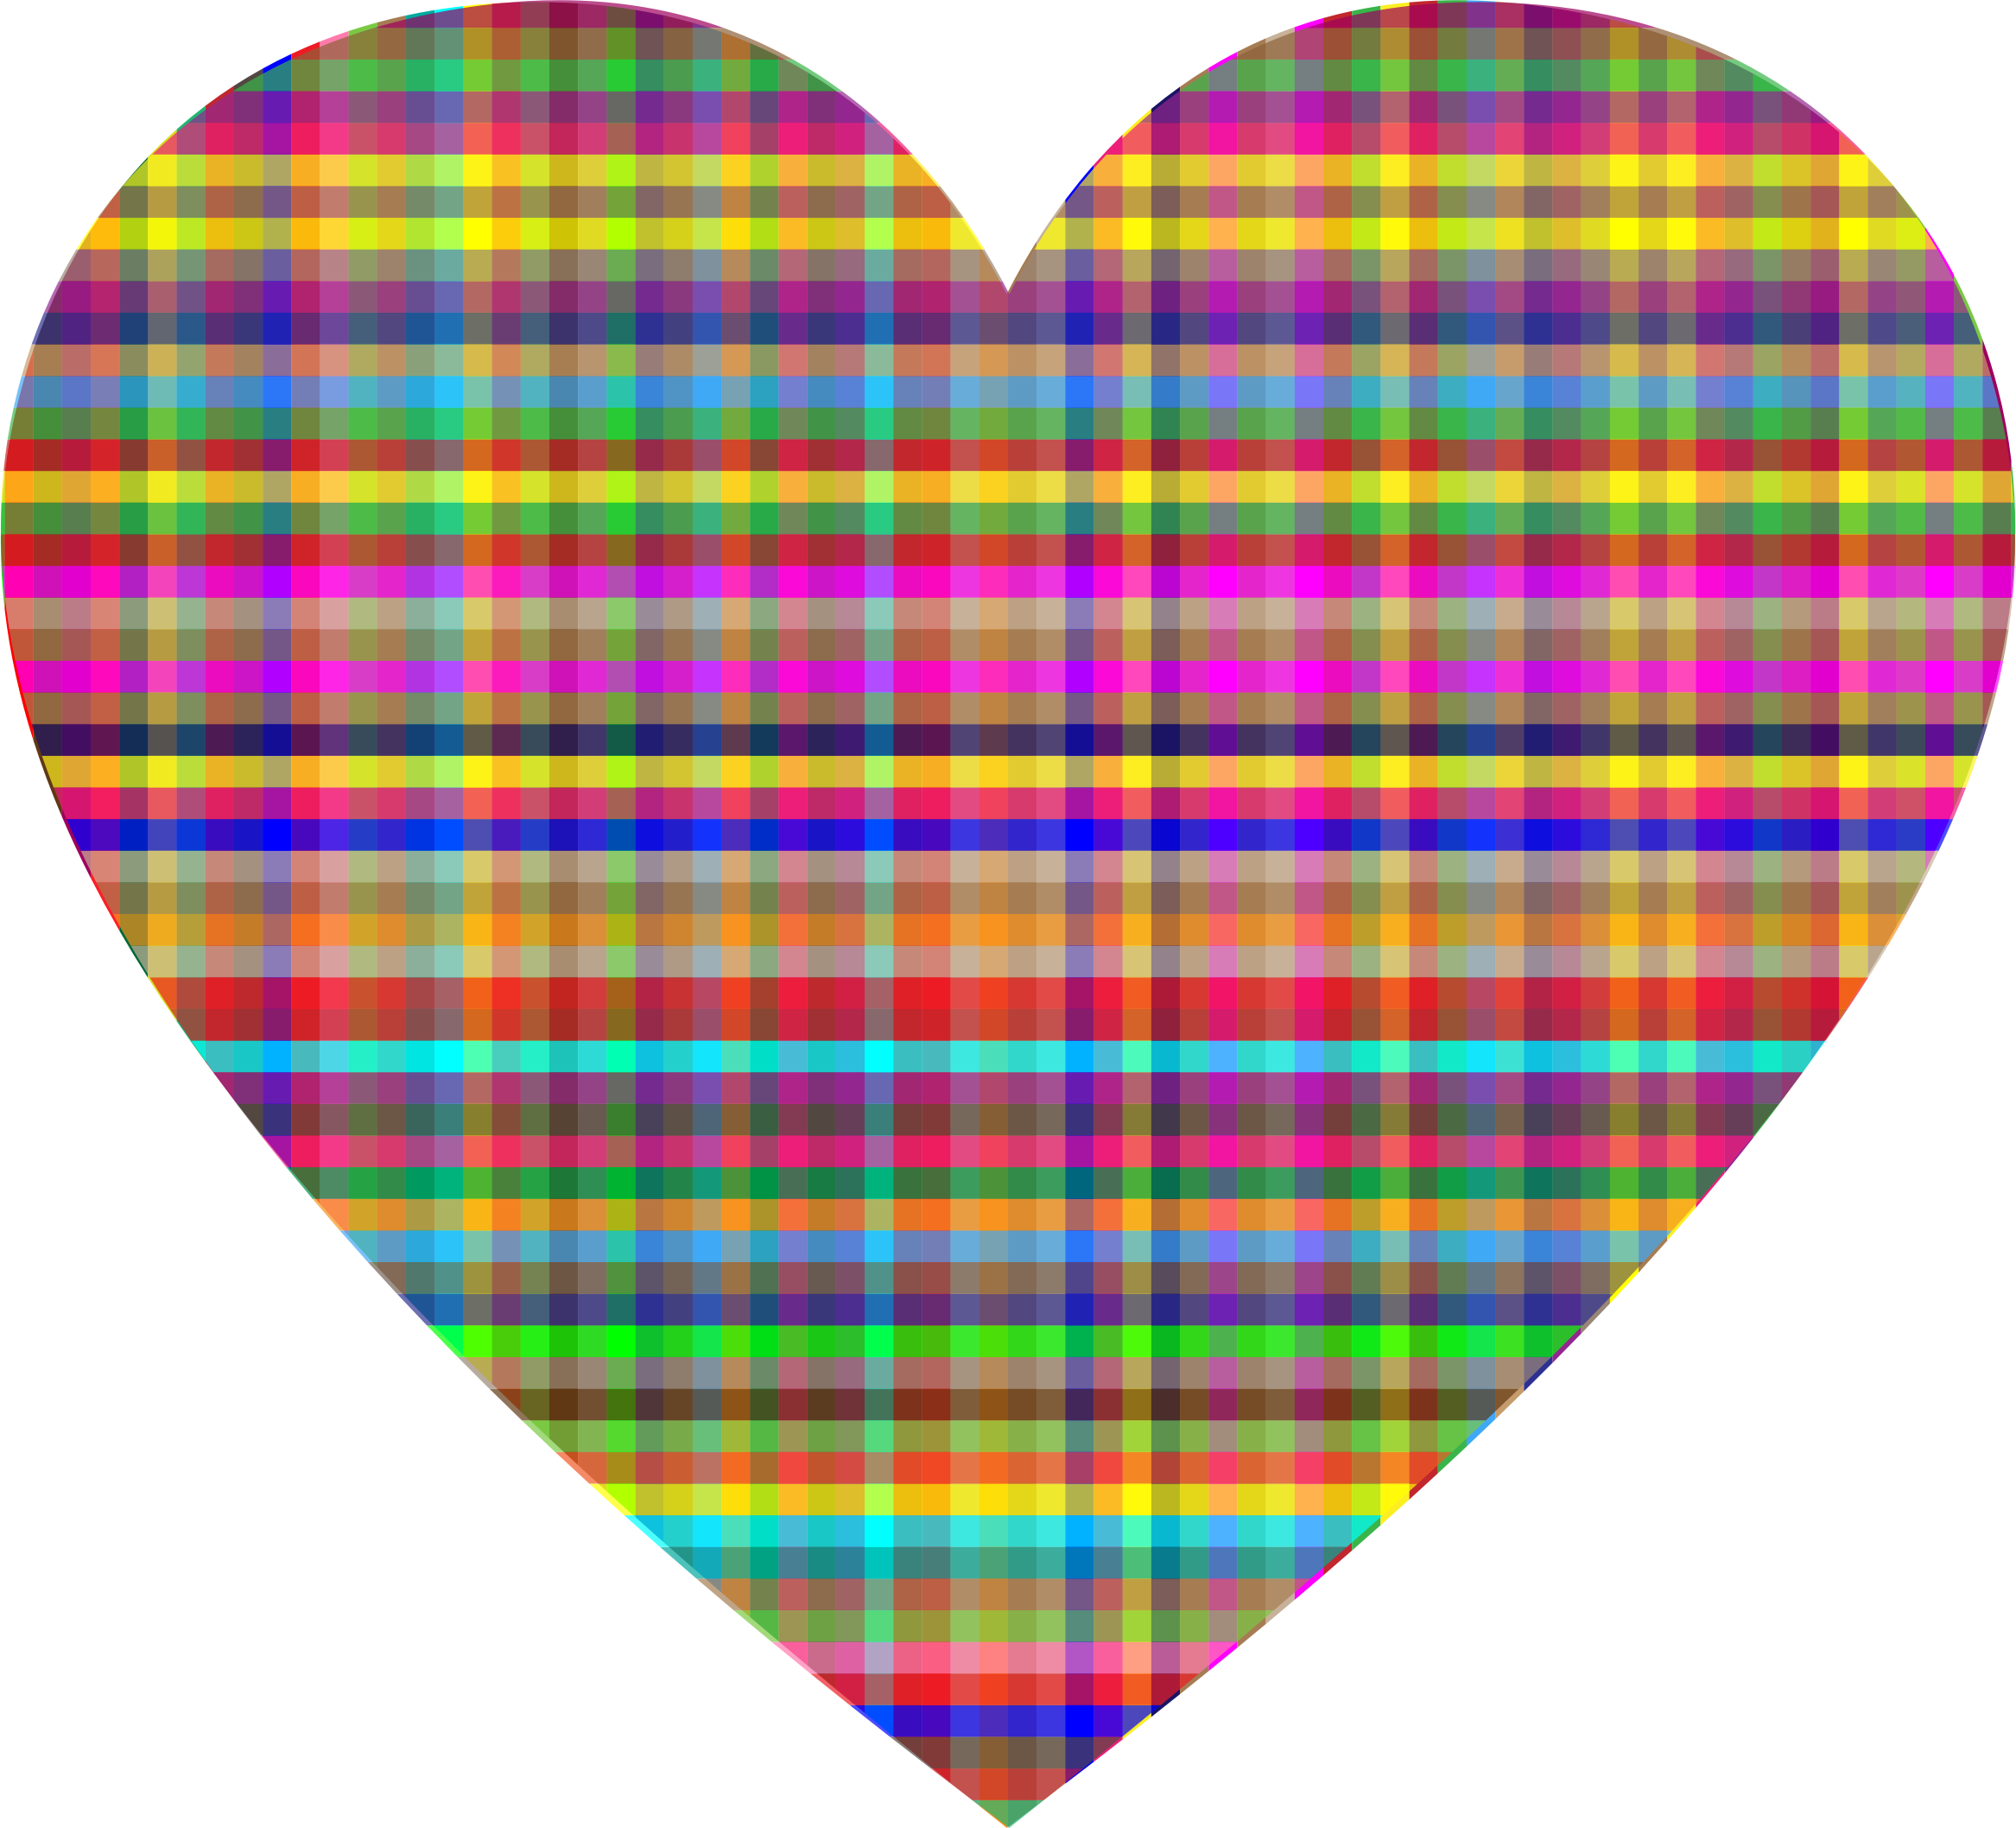 Checkered Heart - Checkered Heart (2334x2116)